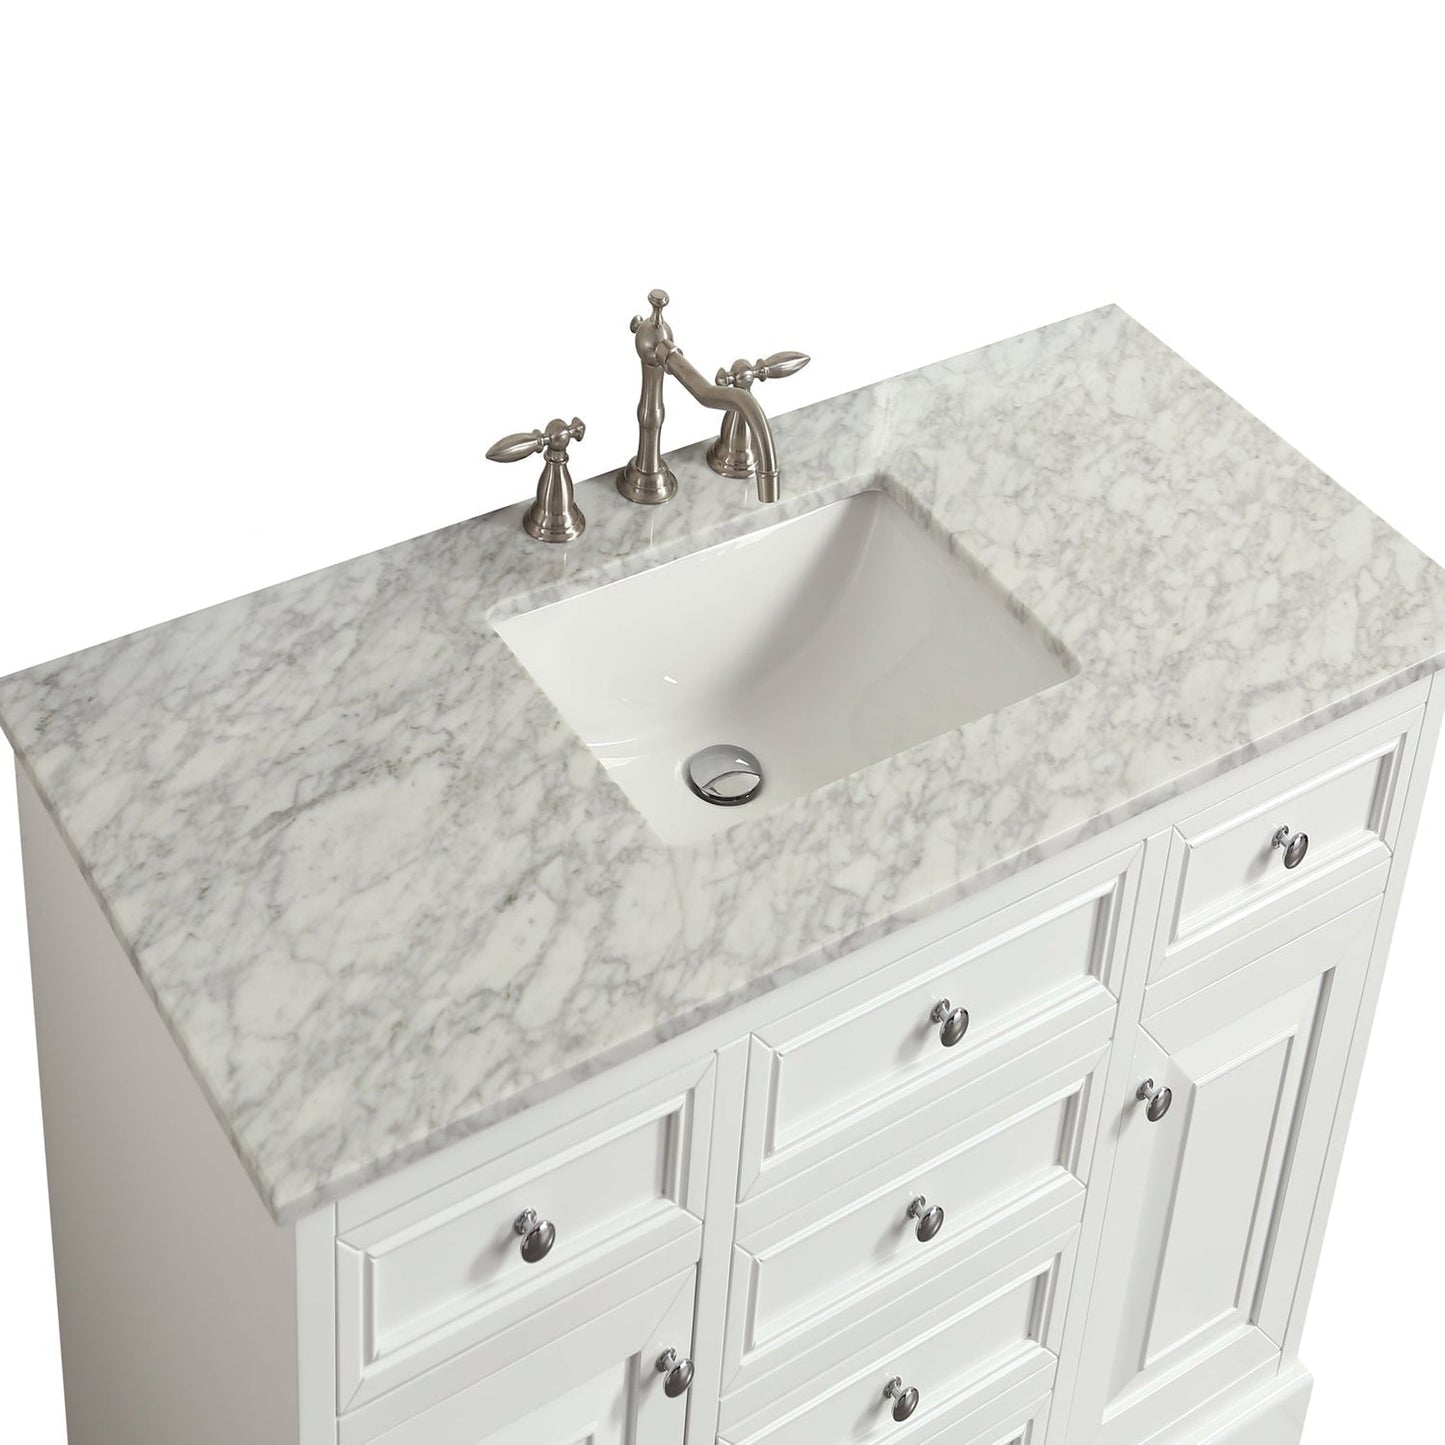 Eviva Monroe 48" x 35" White Bathroom Vanity With White Carrara Marble Countertop and Single Undermount Sink